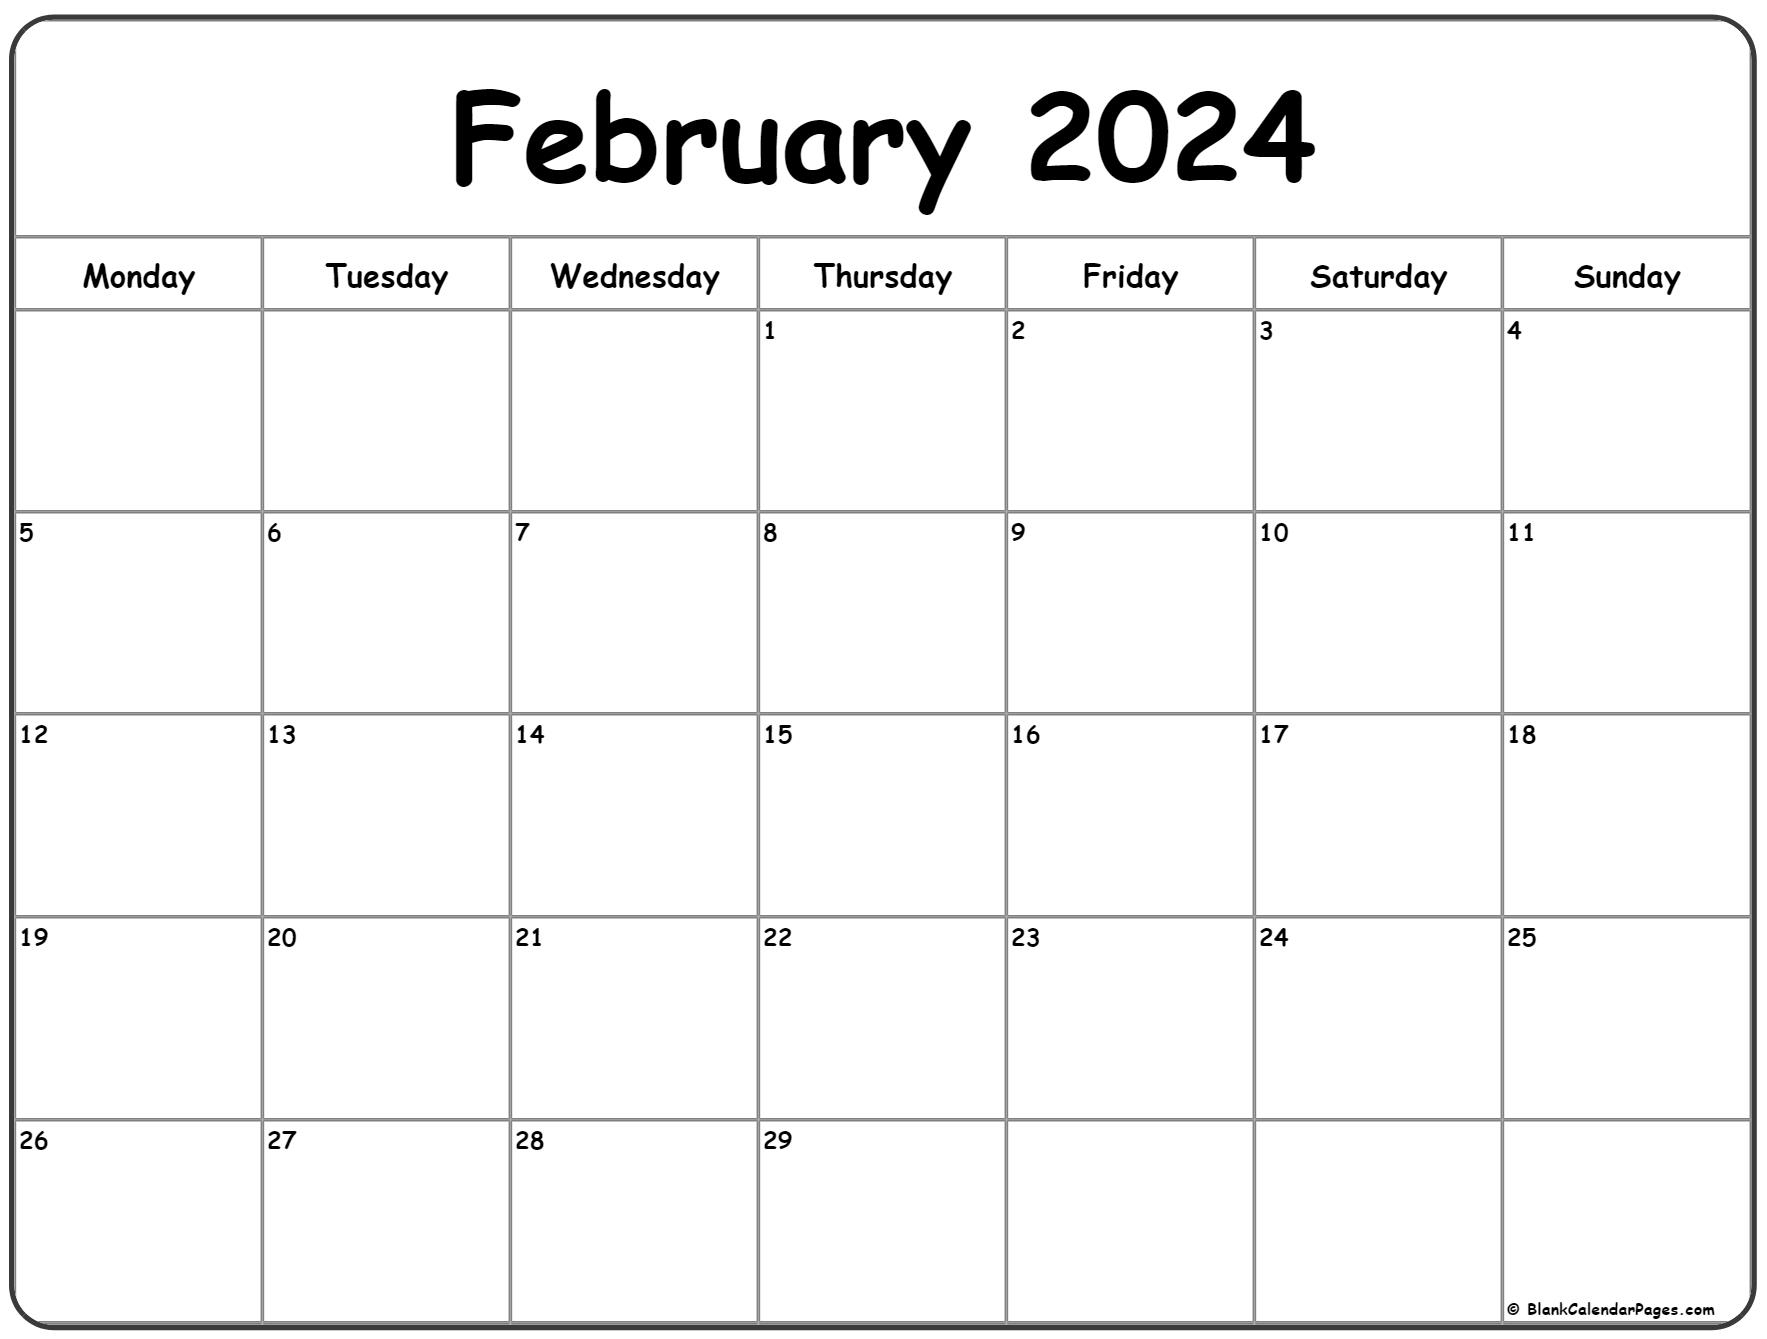 February 2024 Monday Calendar | Monday To Sunday for Calendar February 2024 Printable Free